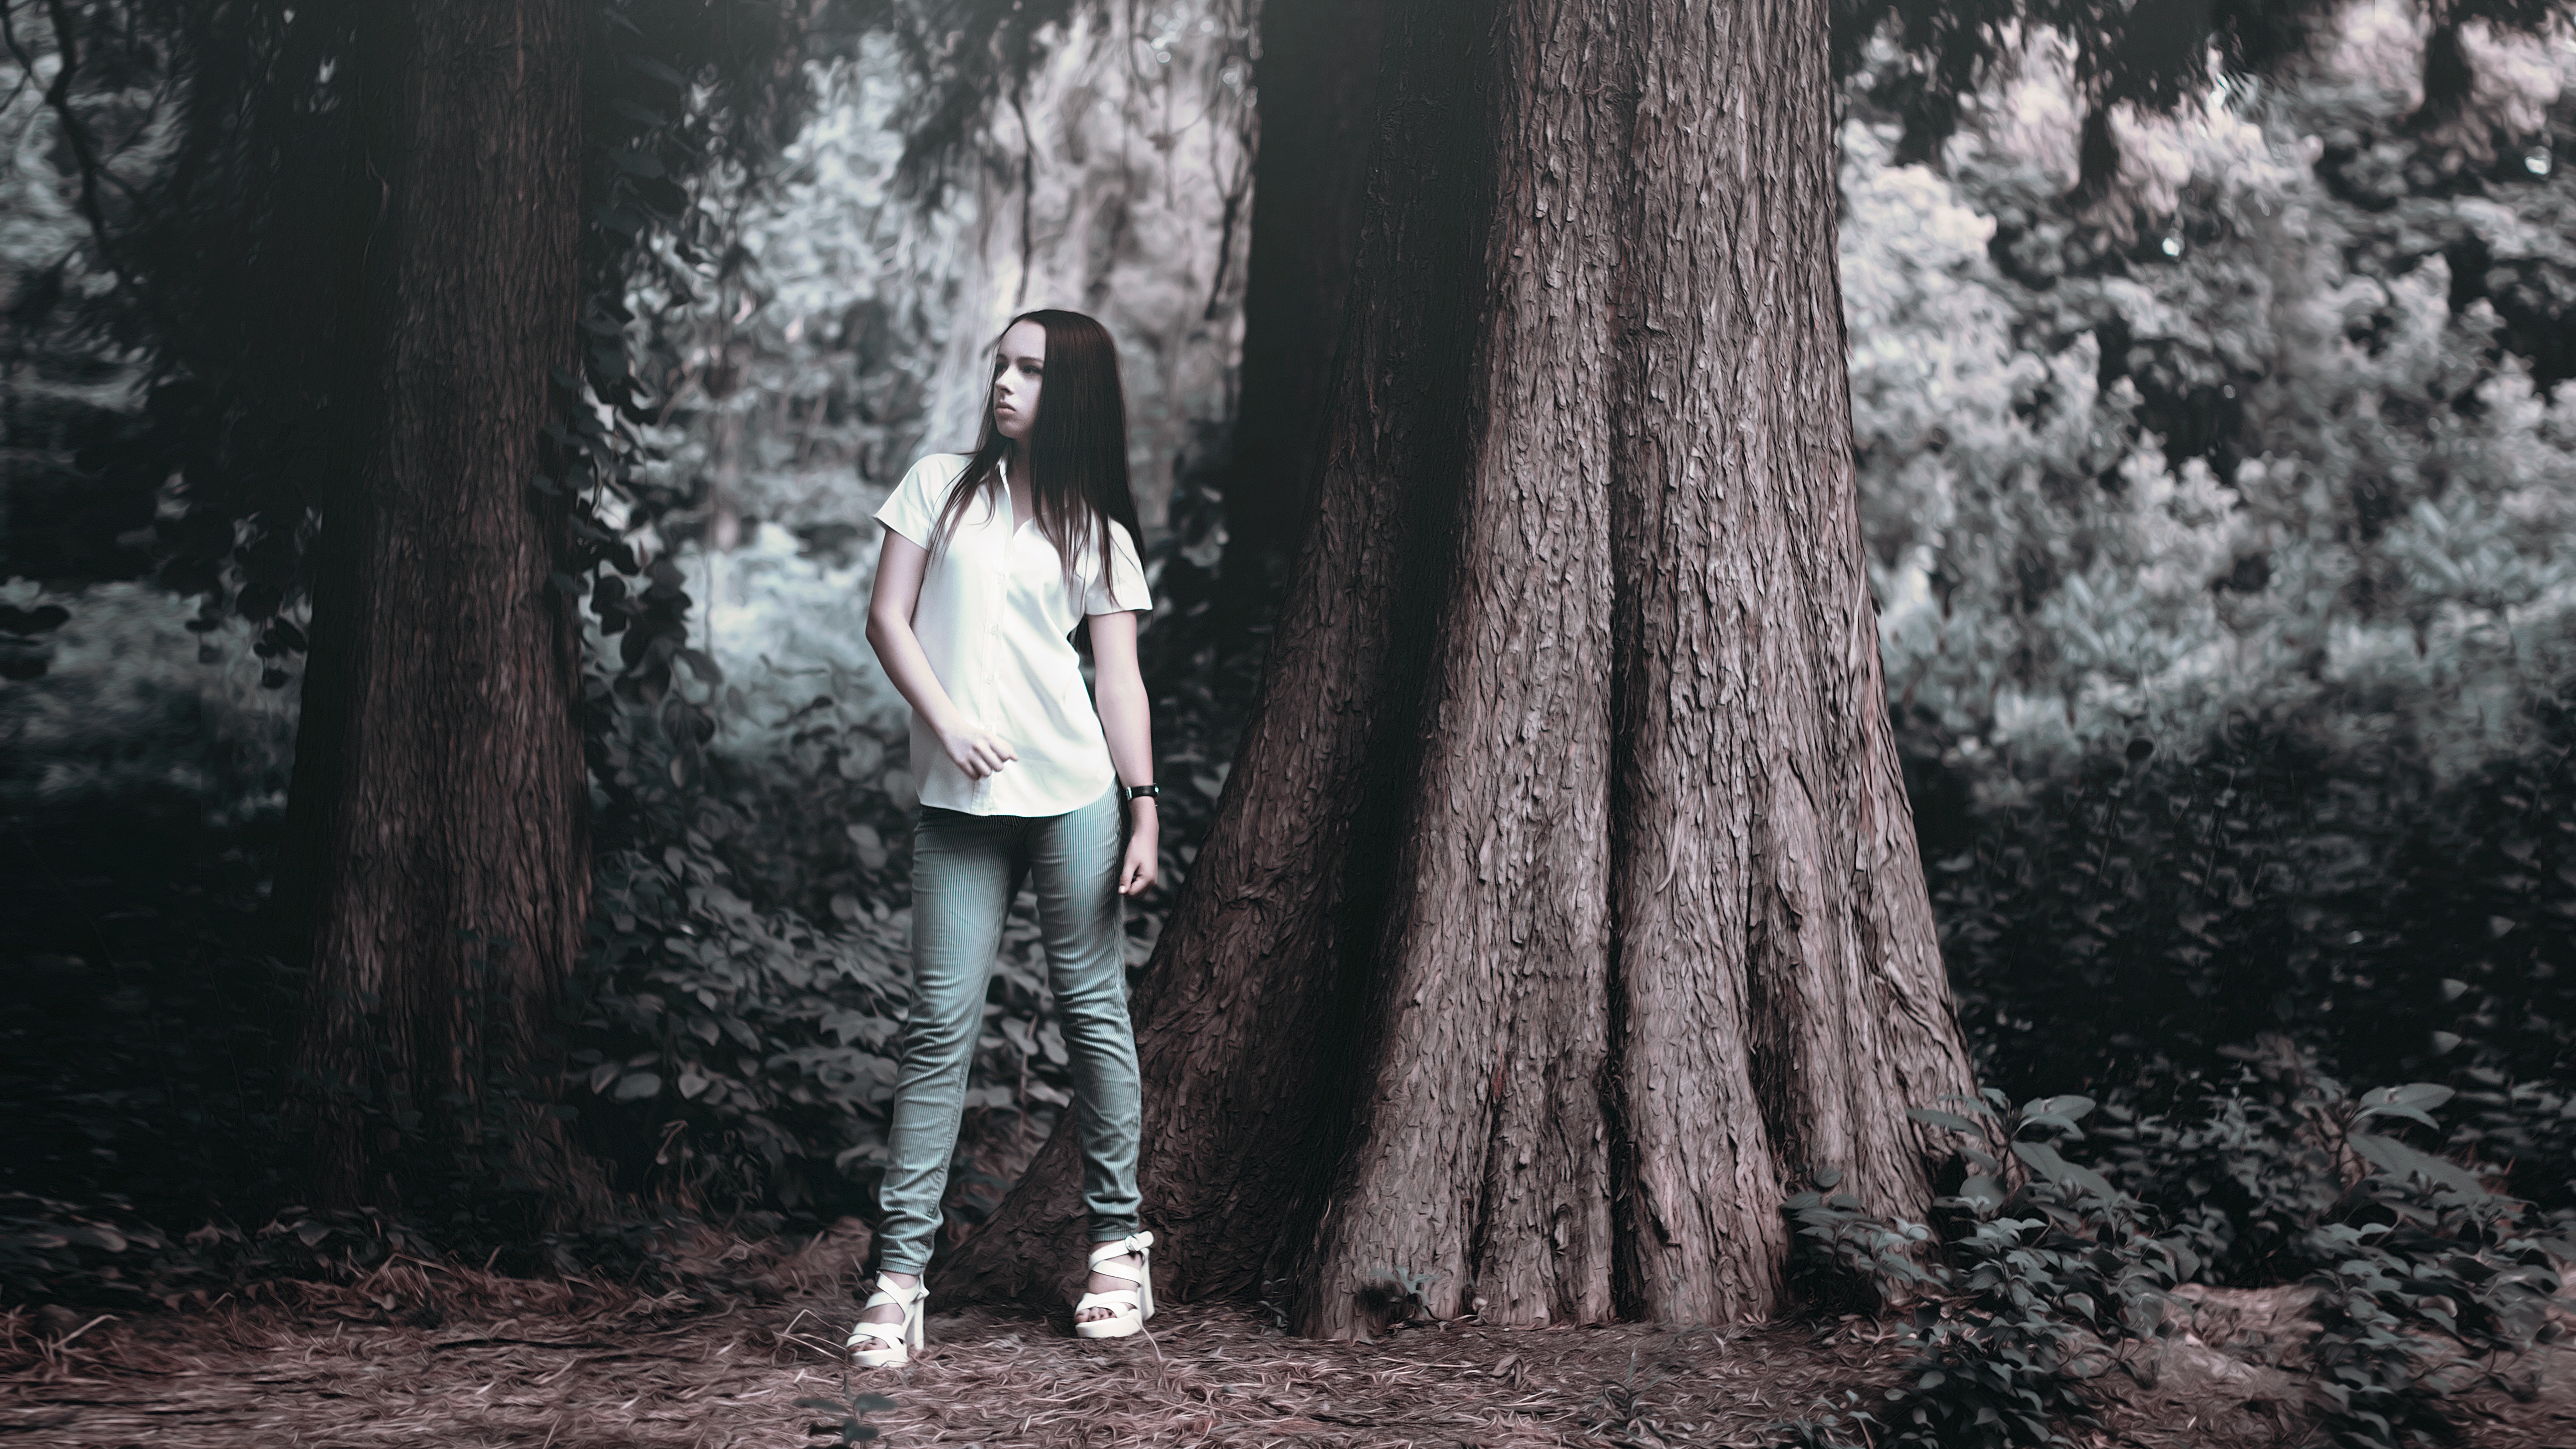 Girl Near The Tree, White Shirt, Jeans, tree trunk, tree